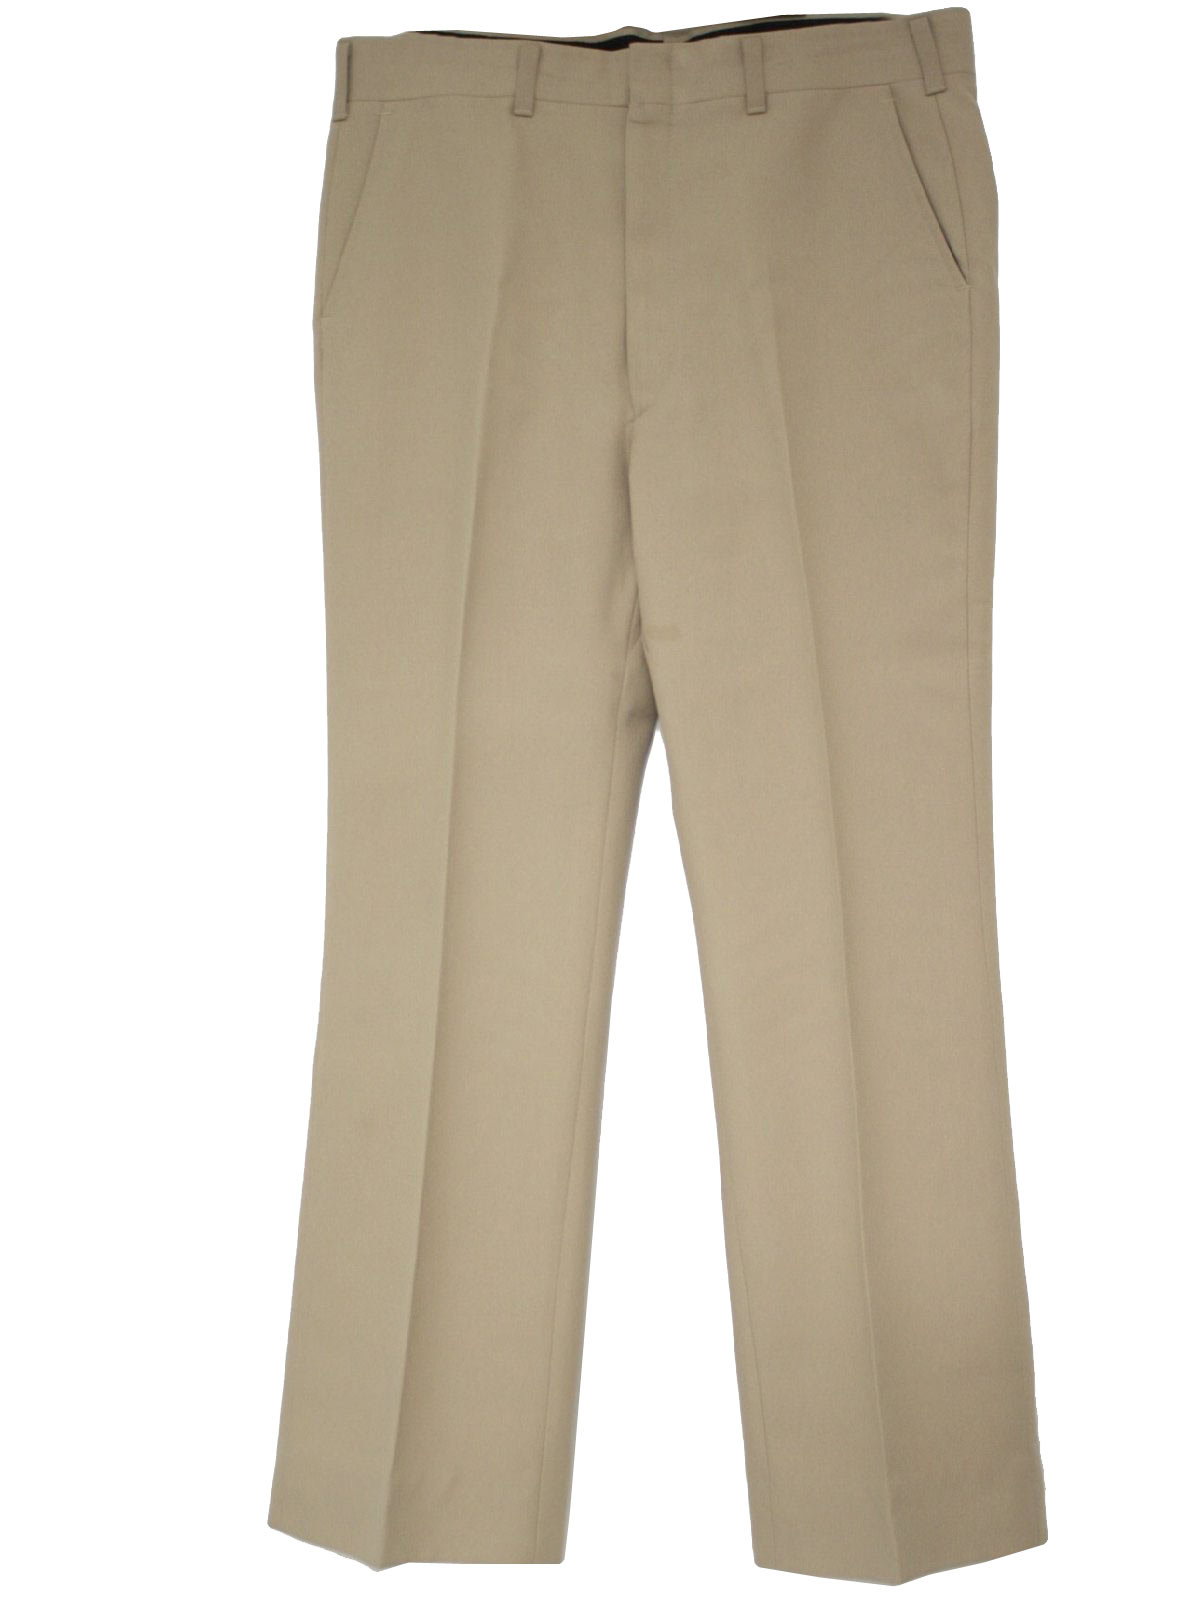 Vintage 70s Flared Pants / Flares: 70s -Haggar Slacks- Mens beige ...